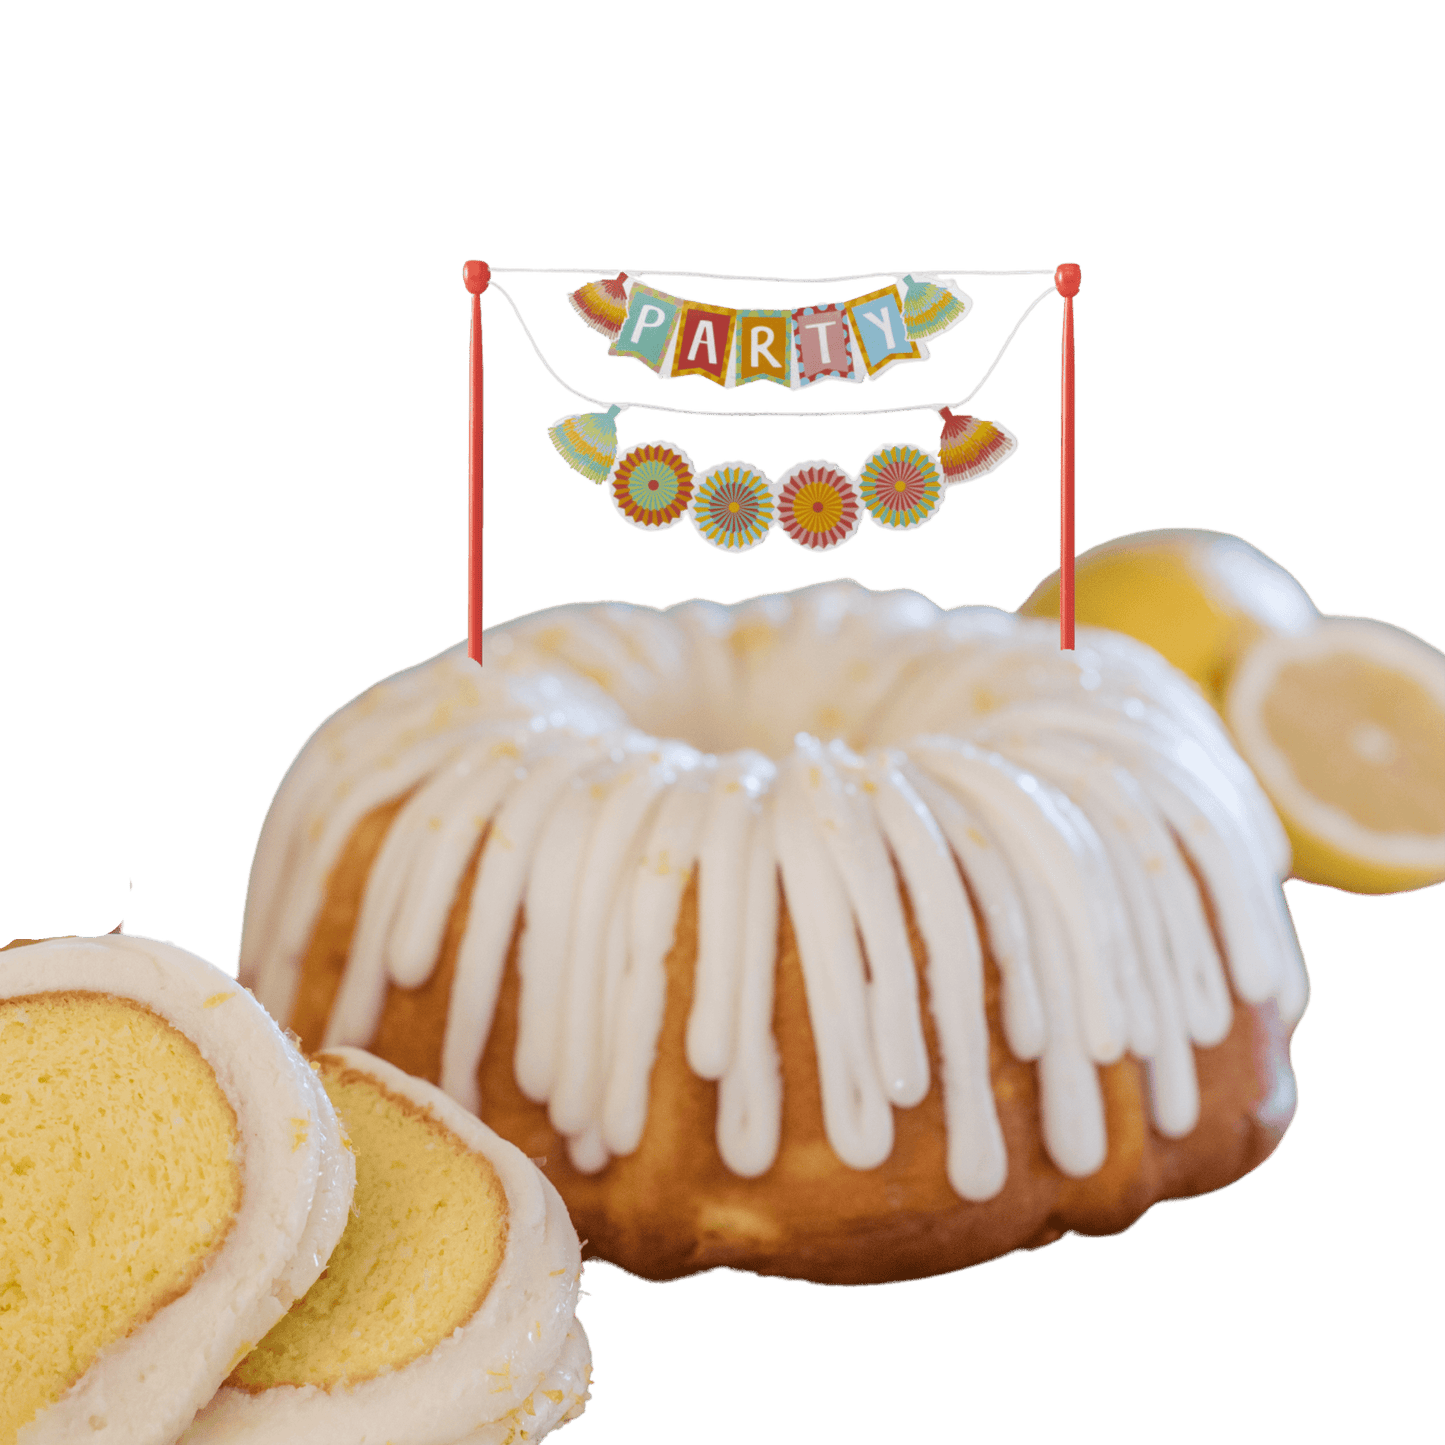 Lemon Squeeze "PARTY" Fiesta Cake Banner Bundt Cake